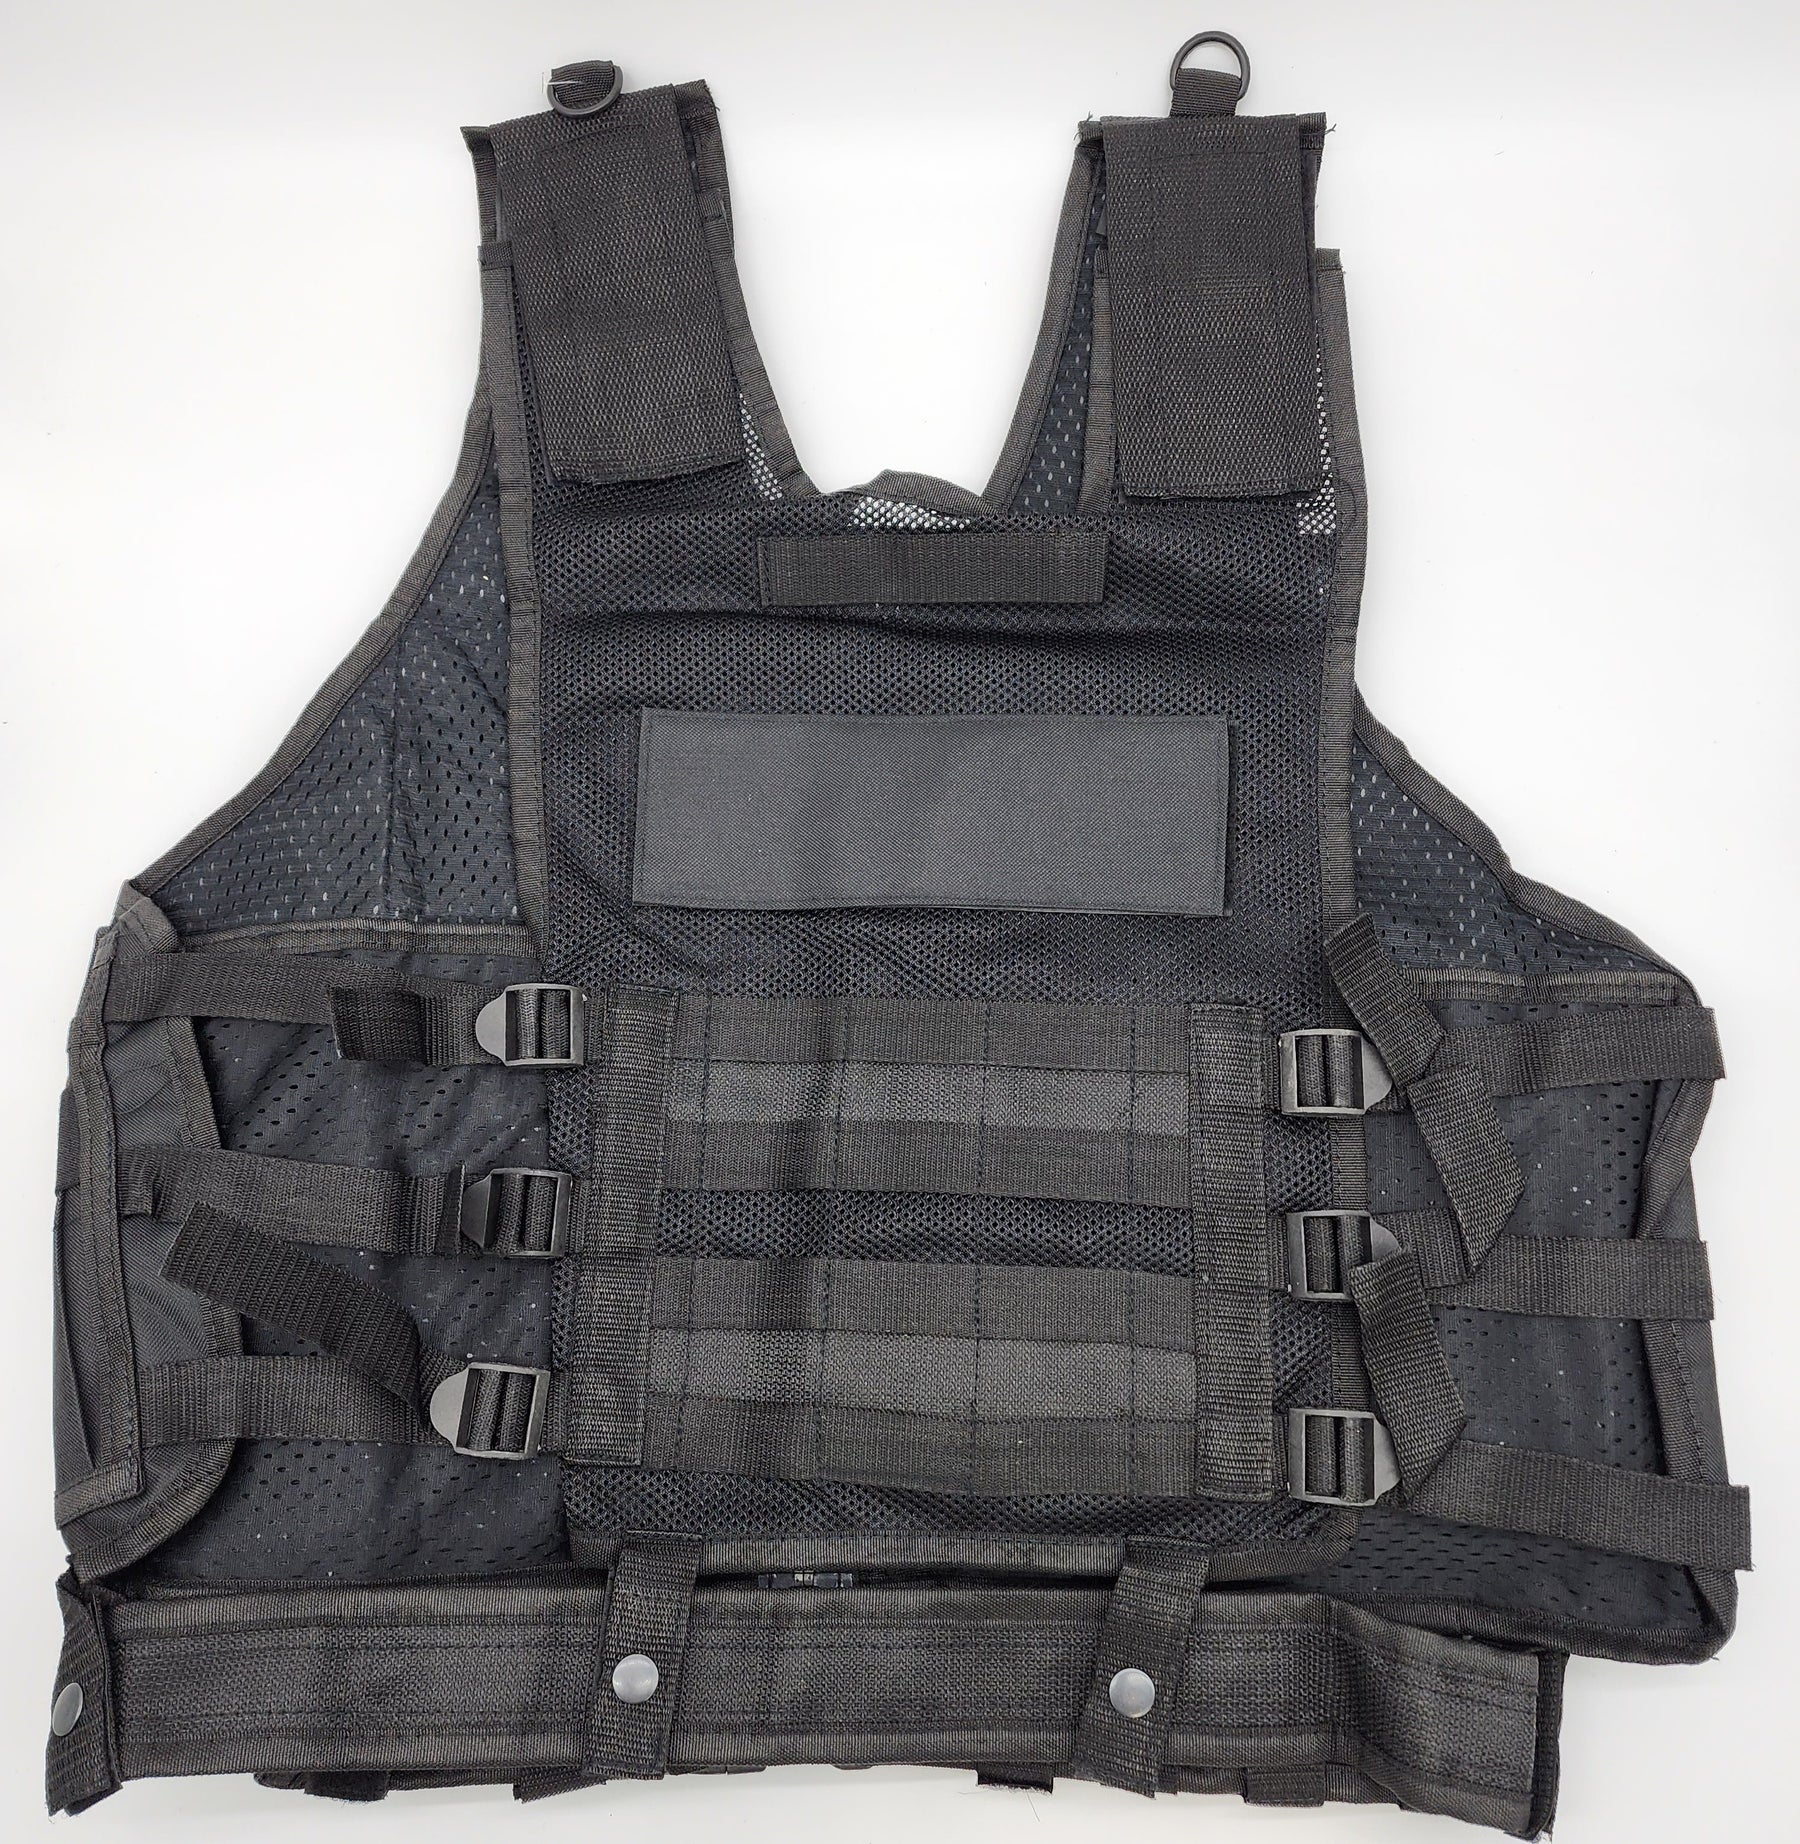 Tactical Airsoft Vest | w/ Pistol Holster | Fully Adjustable | Color: Black